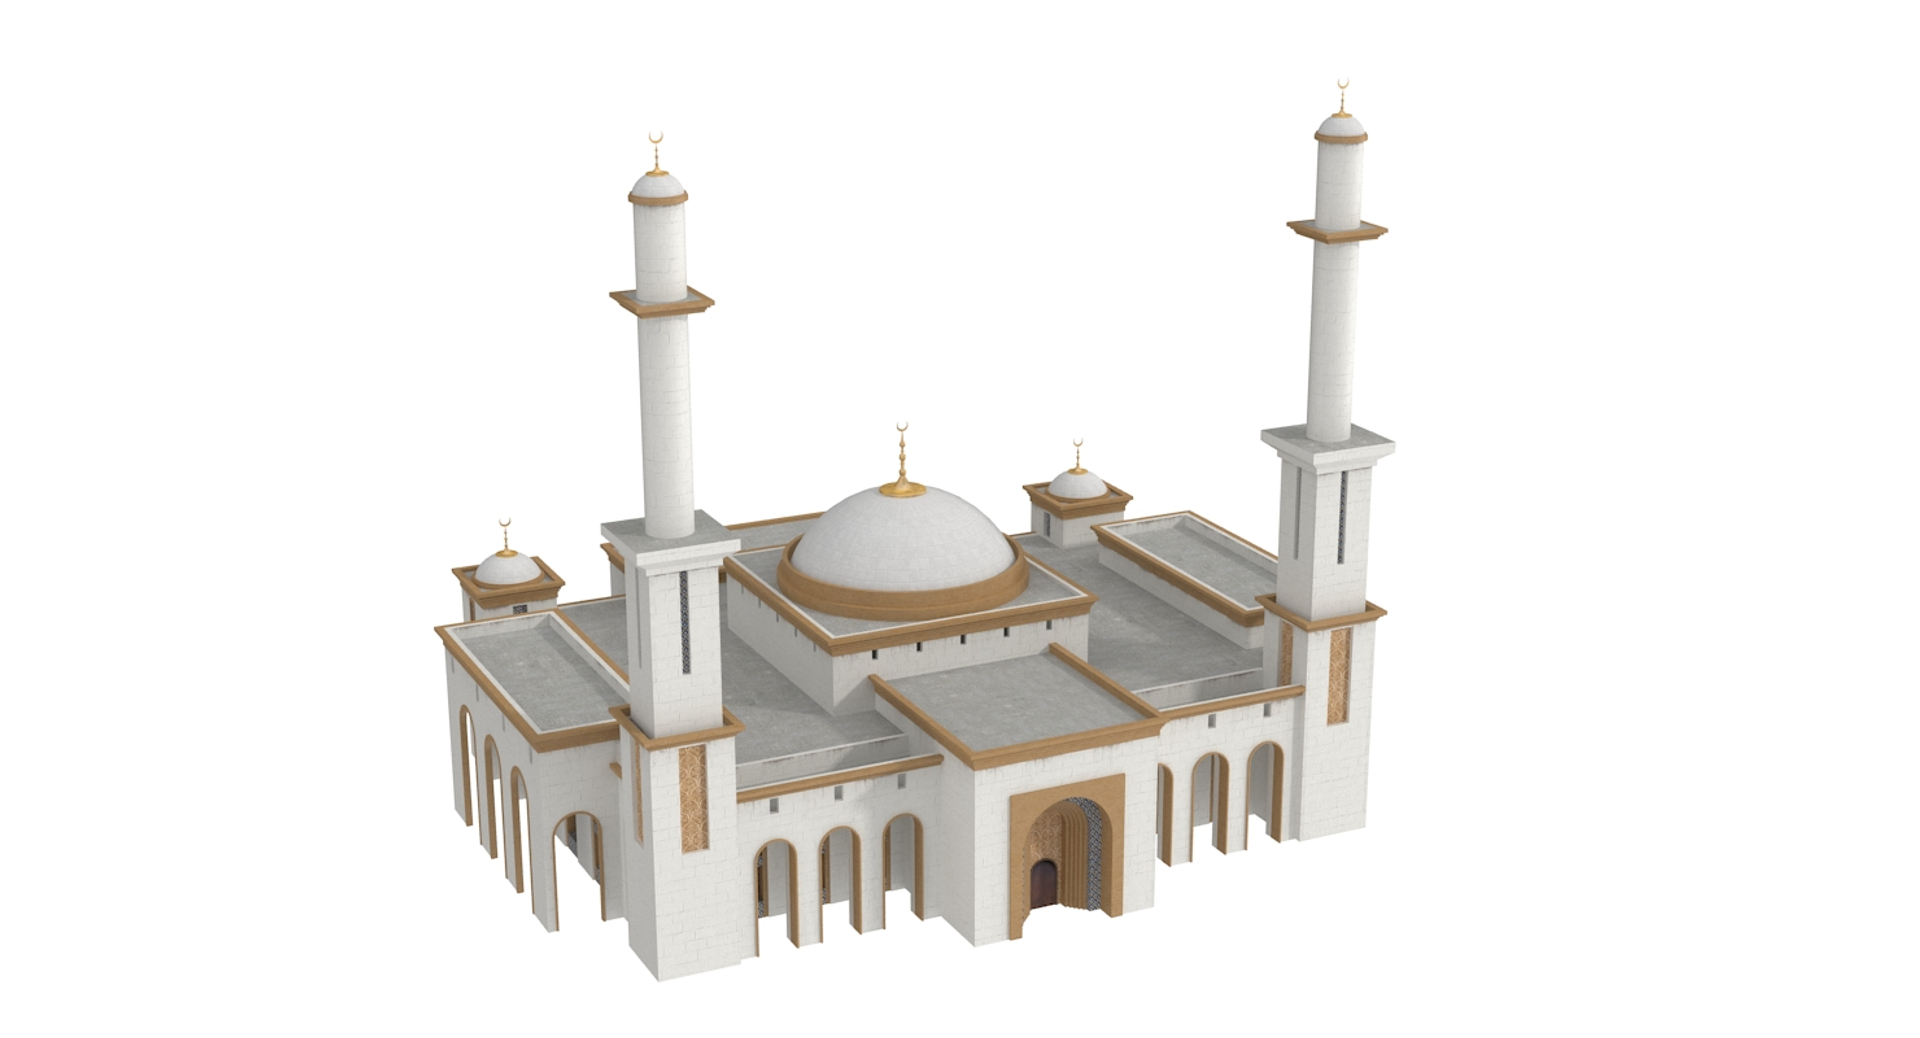 mosque 3D model https://p.turbosquid.com/ts-thumb/Gk/IHVyYr/eZg3lkkk/mosque_a_fr/jpg/1494022461/1920x1080/turn_fit_q99/73a824f7ad326b0026ee7129facc0650d2e1cc8f/mosque_a_fr-1.jpg